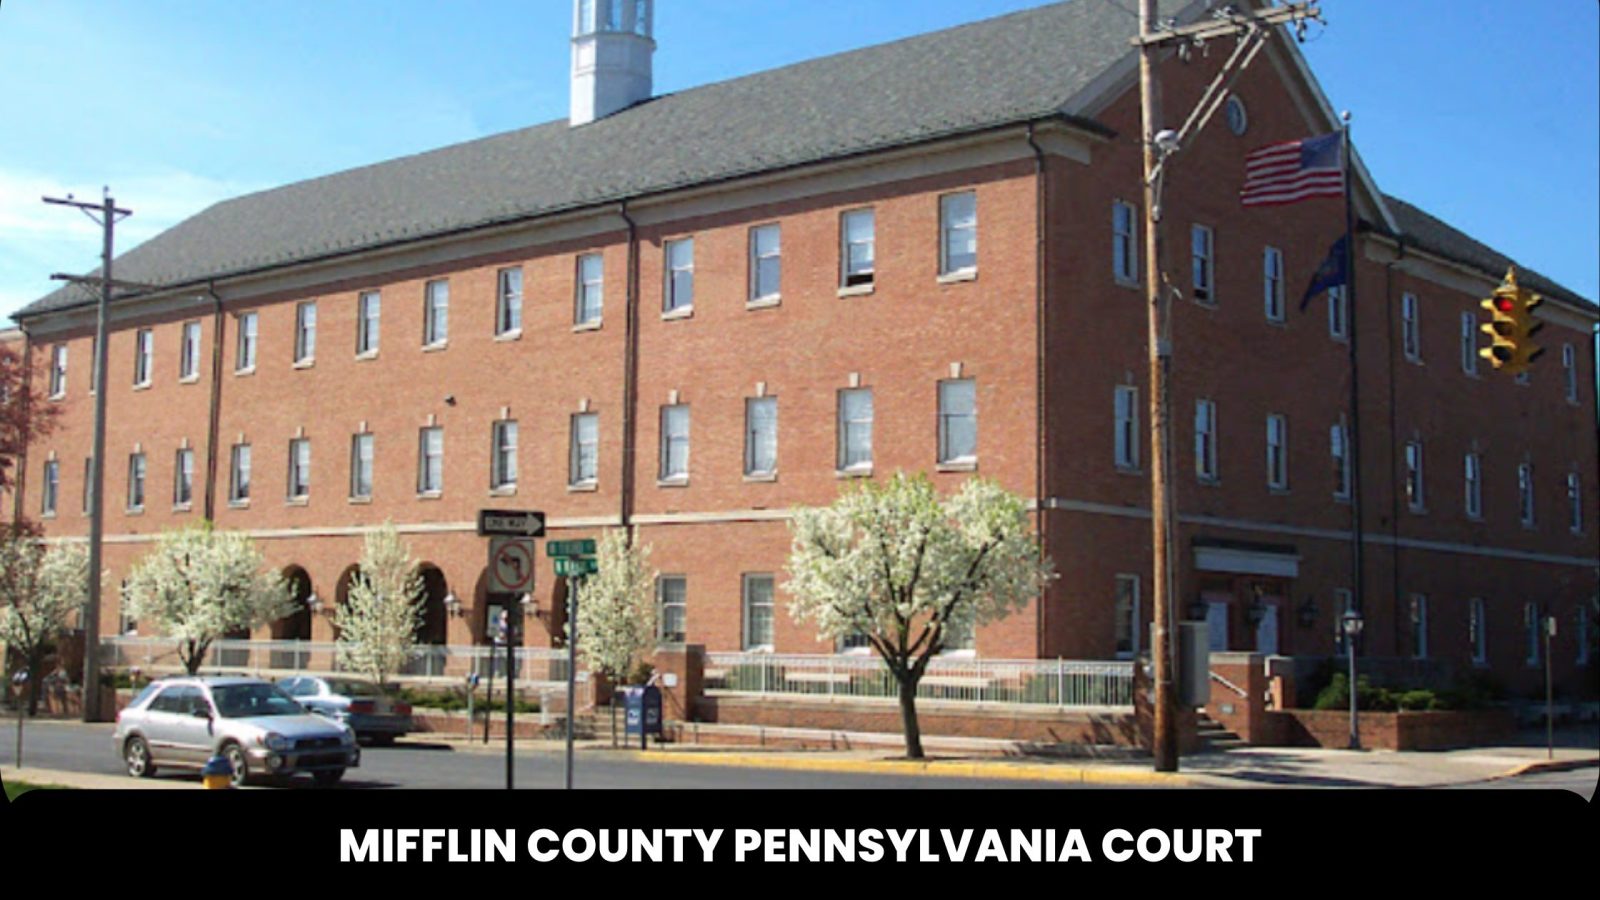 Mifflin County Pennsylvania Court